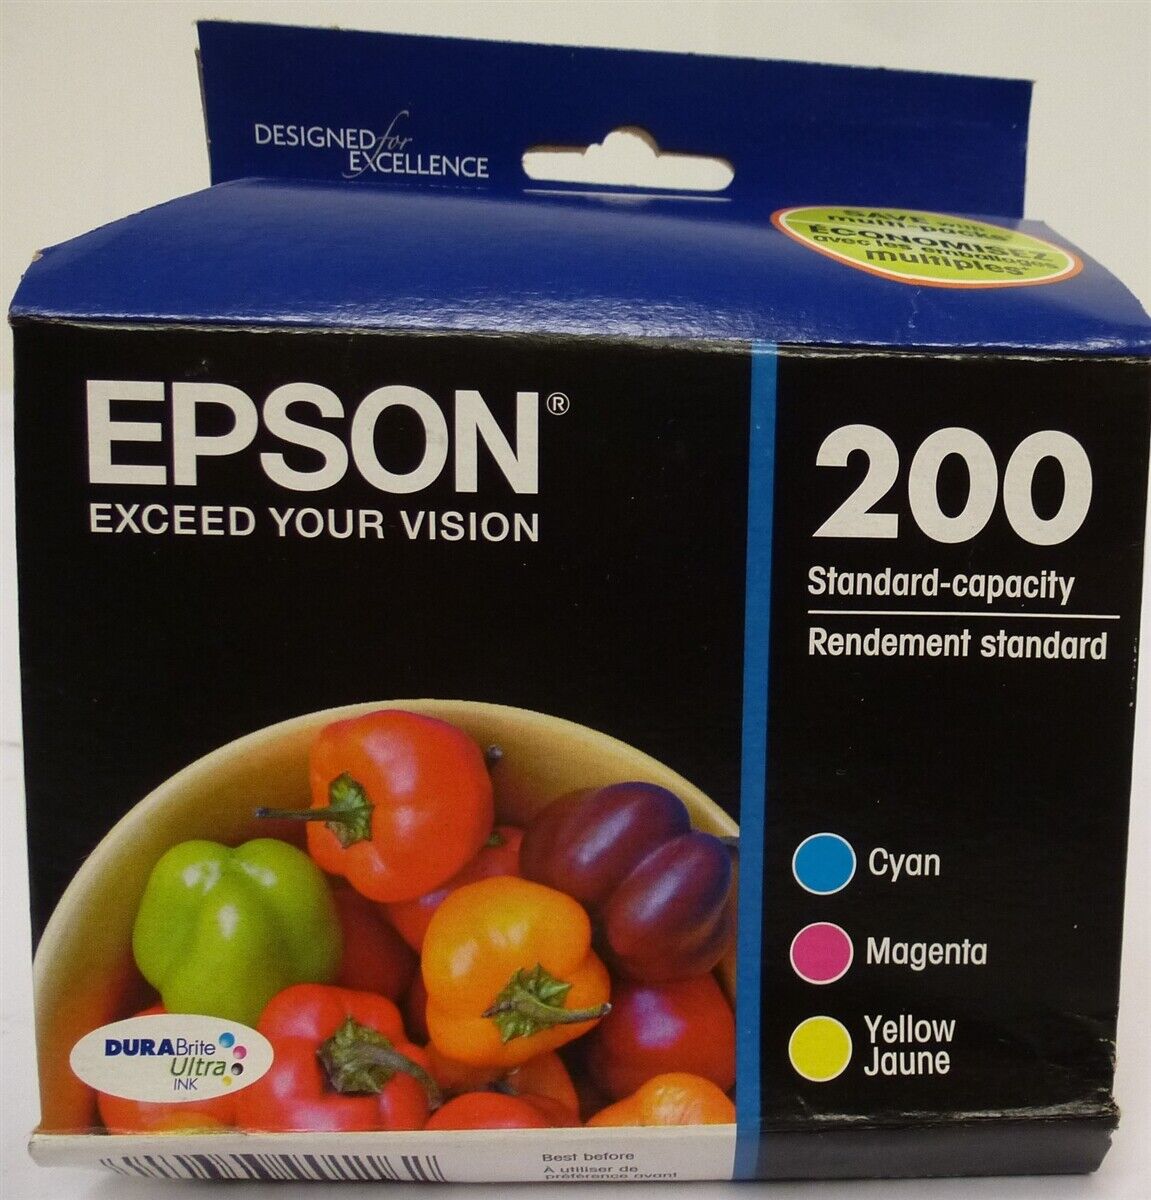 EPSON GENUINE Ink Cartridge 200 Cyan Magenta Yellow exp 02 2020 NEW